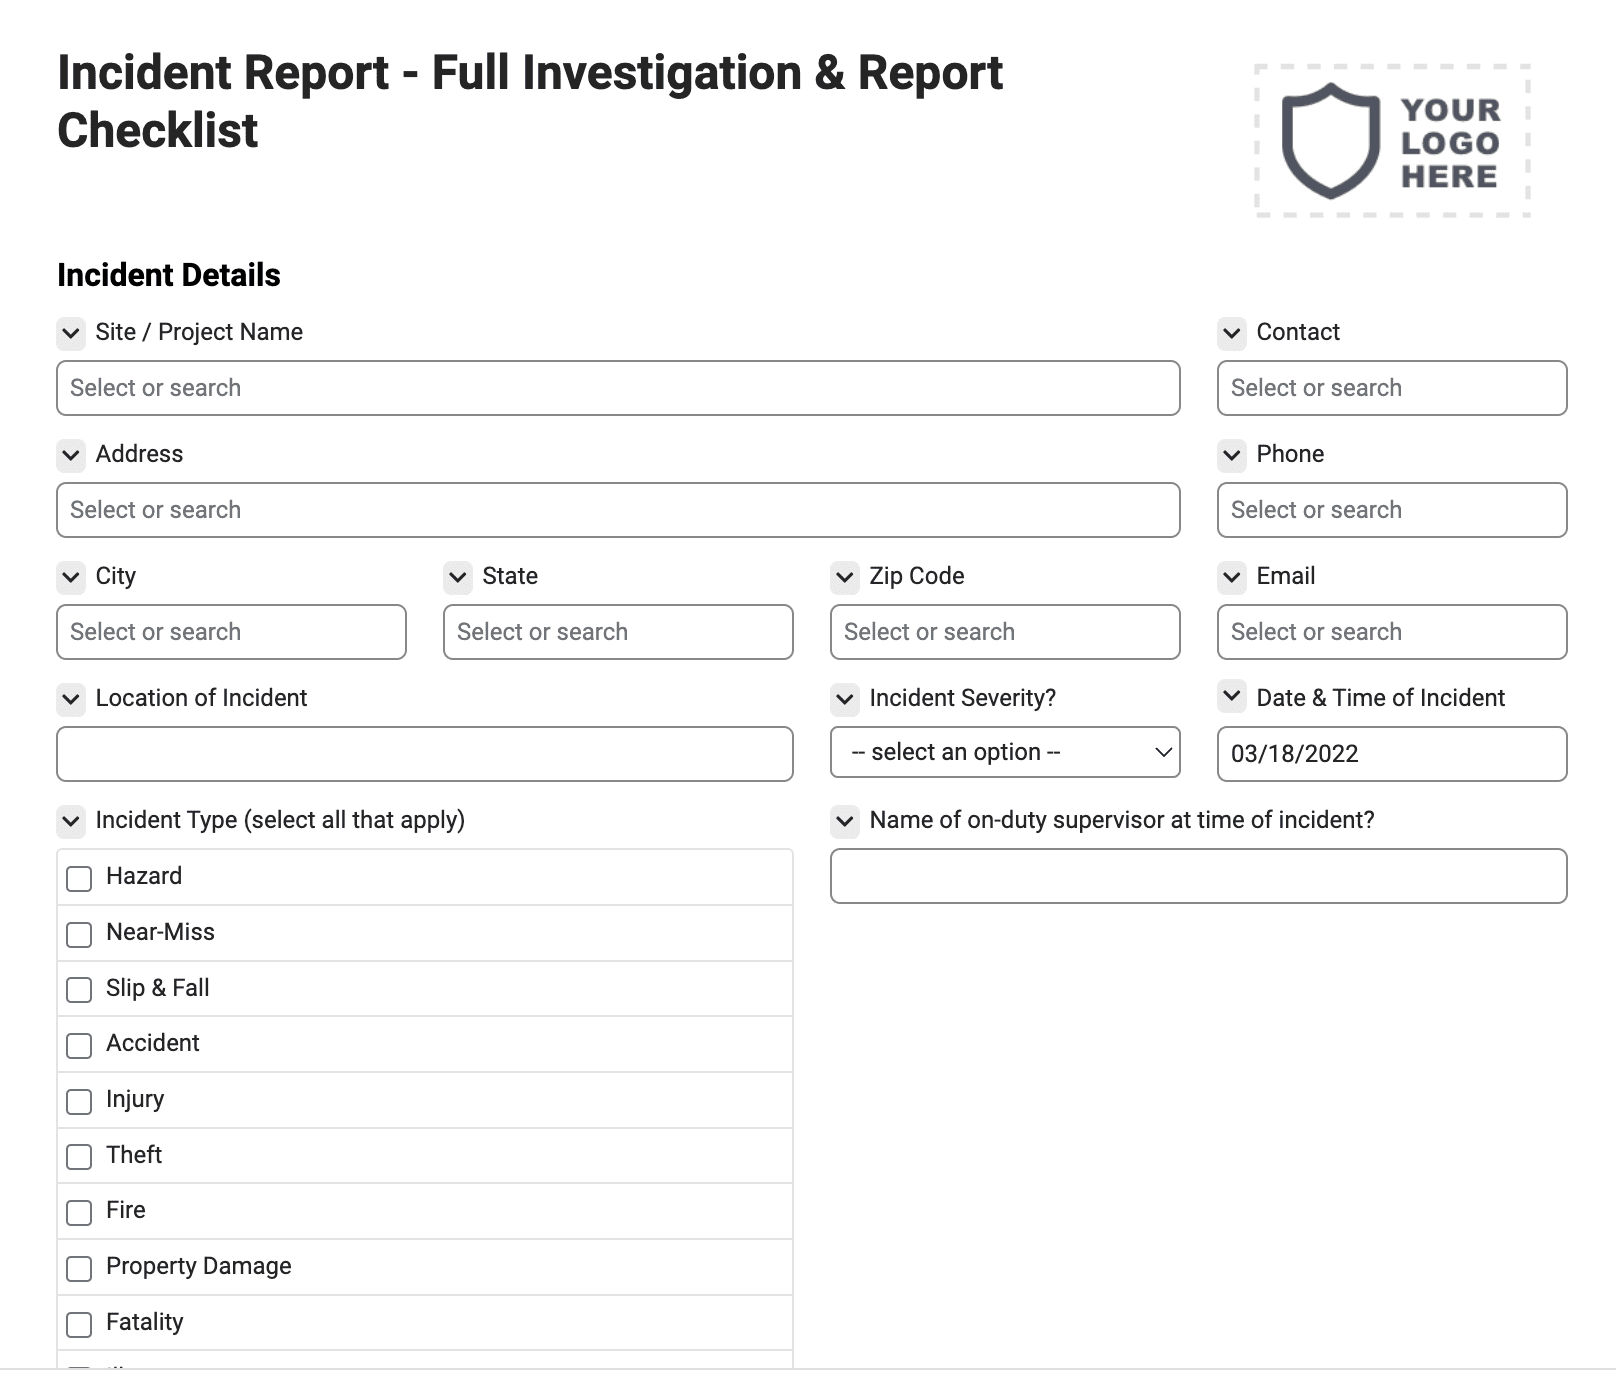 Incident Report - Full Investigation & Report Checklist